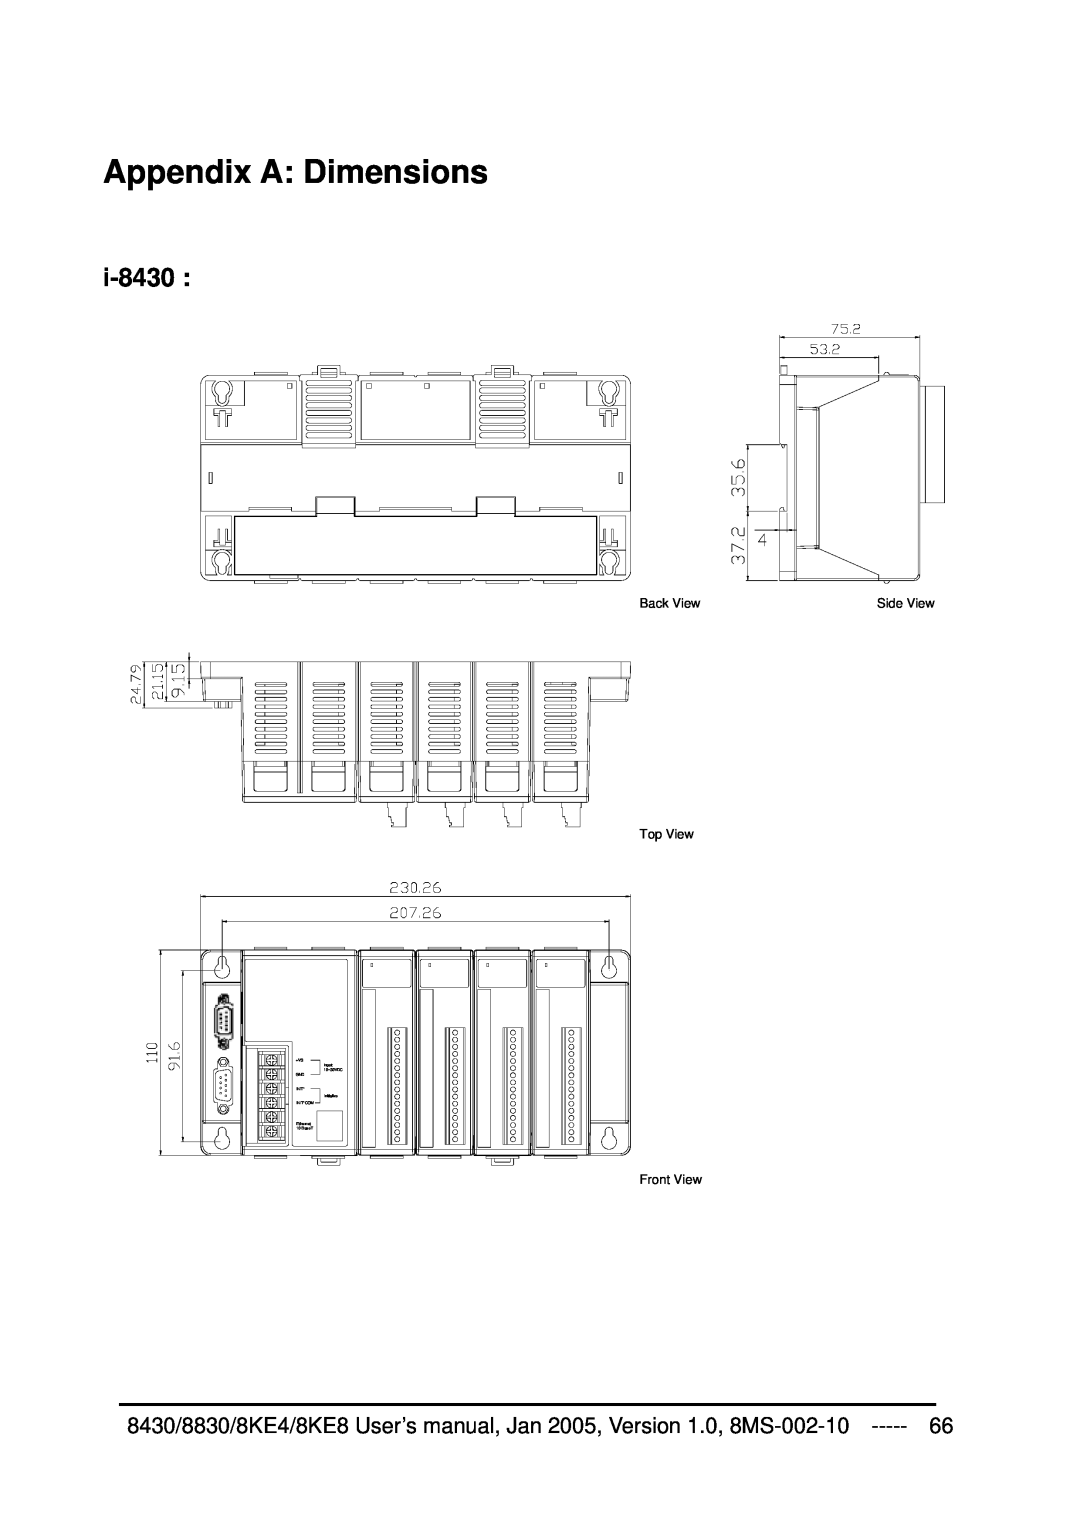 ICP DAS USA 8KE8, 8KE4, 8830 user manual Appendix A Dimensions, i-8430, Back View, Top View, Front View, Side View 